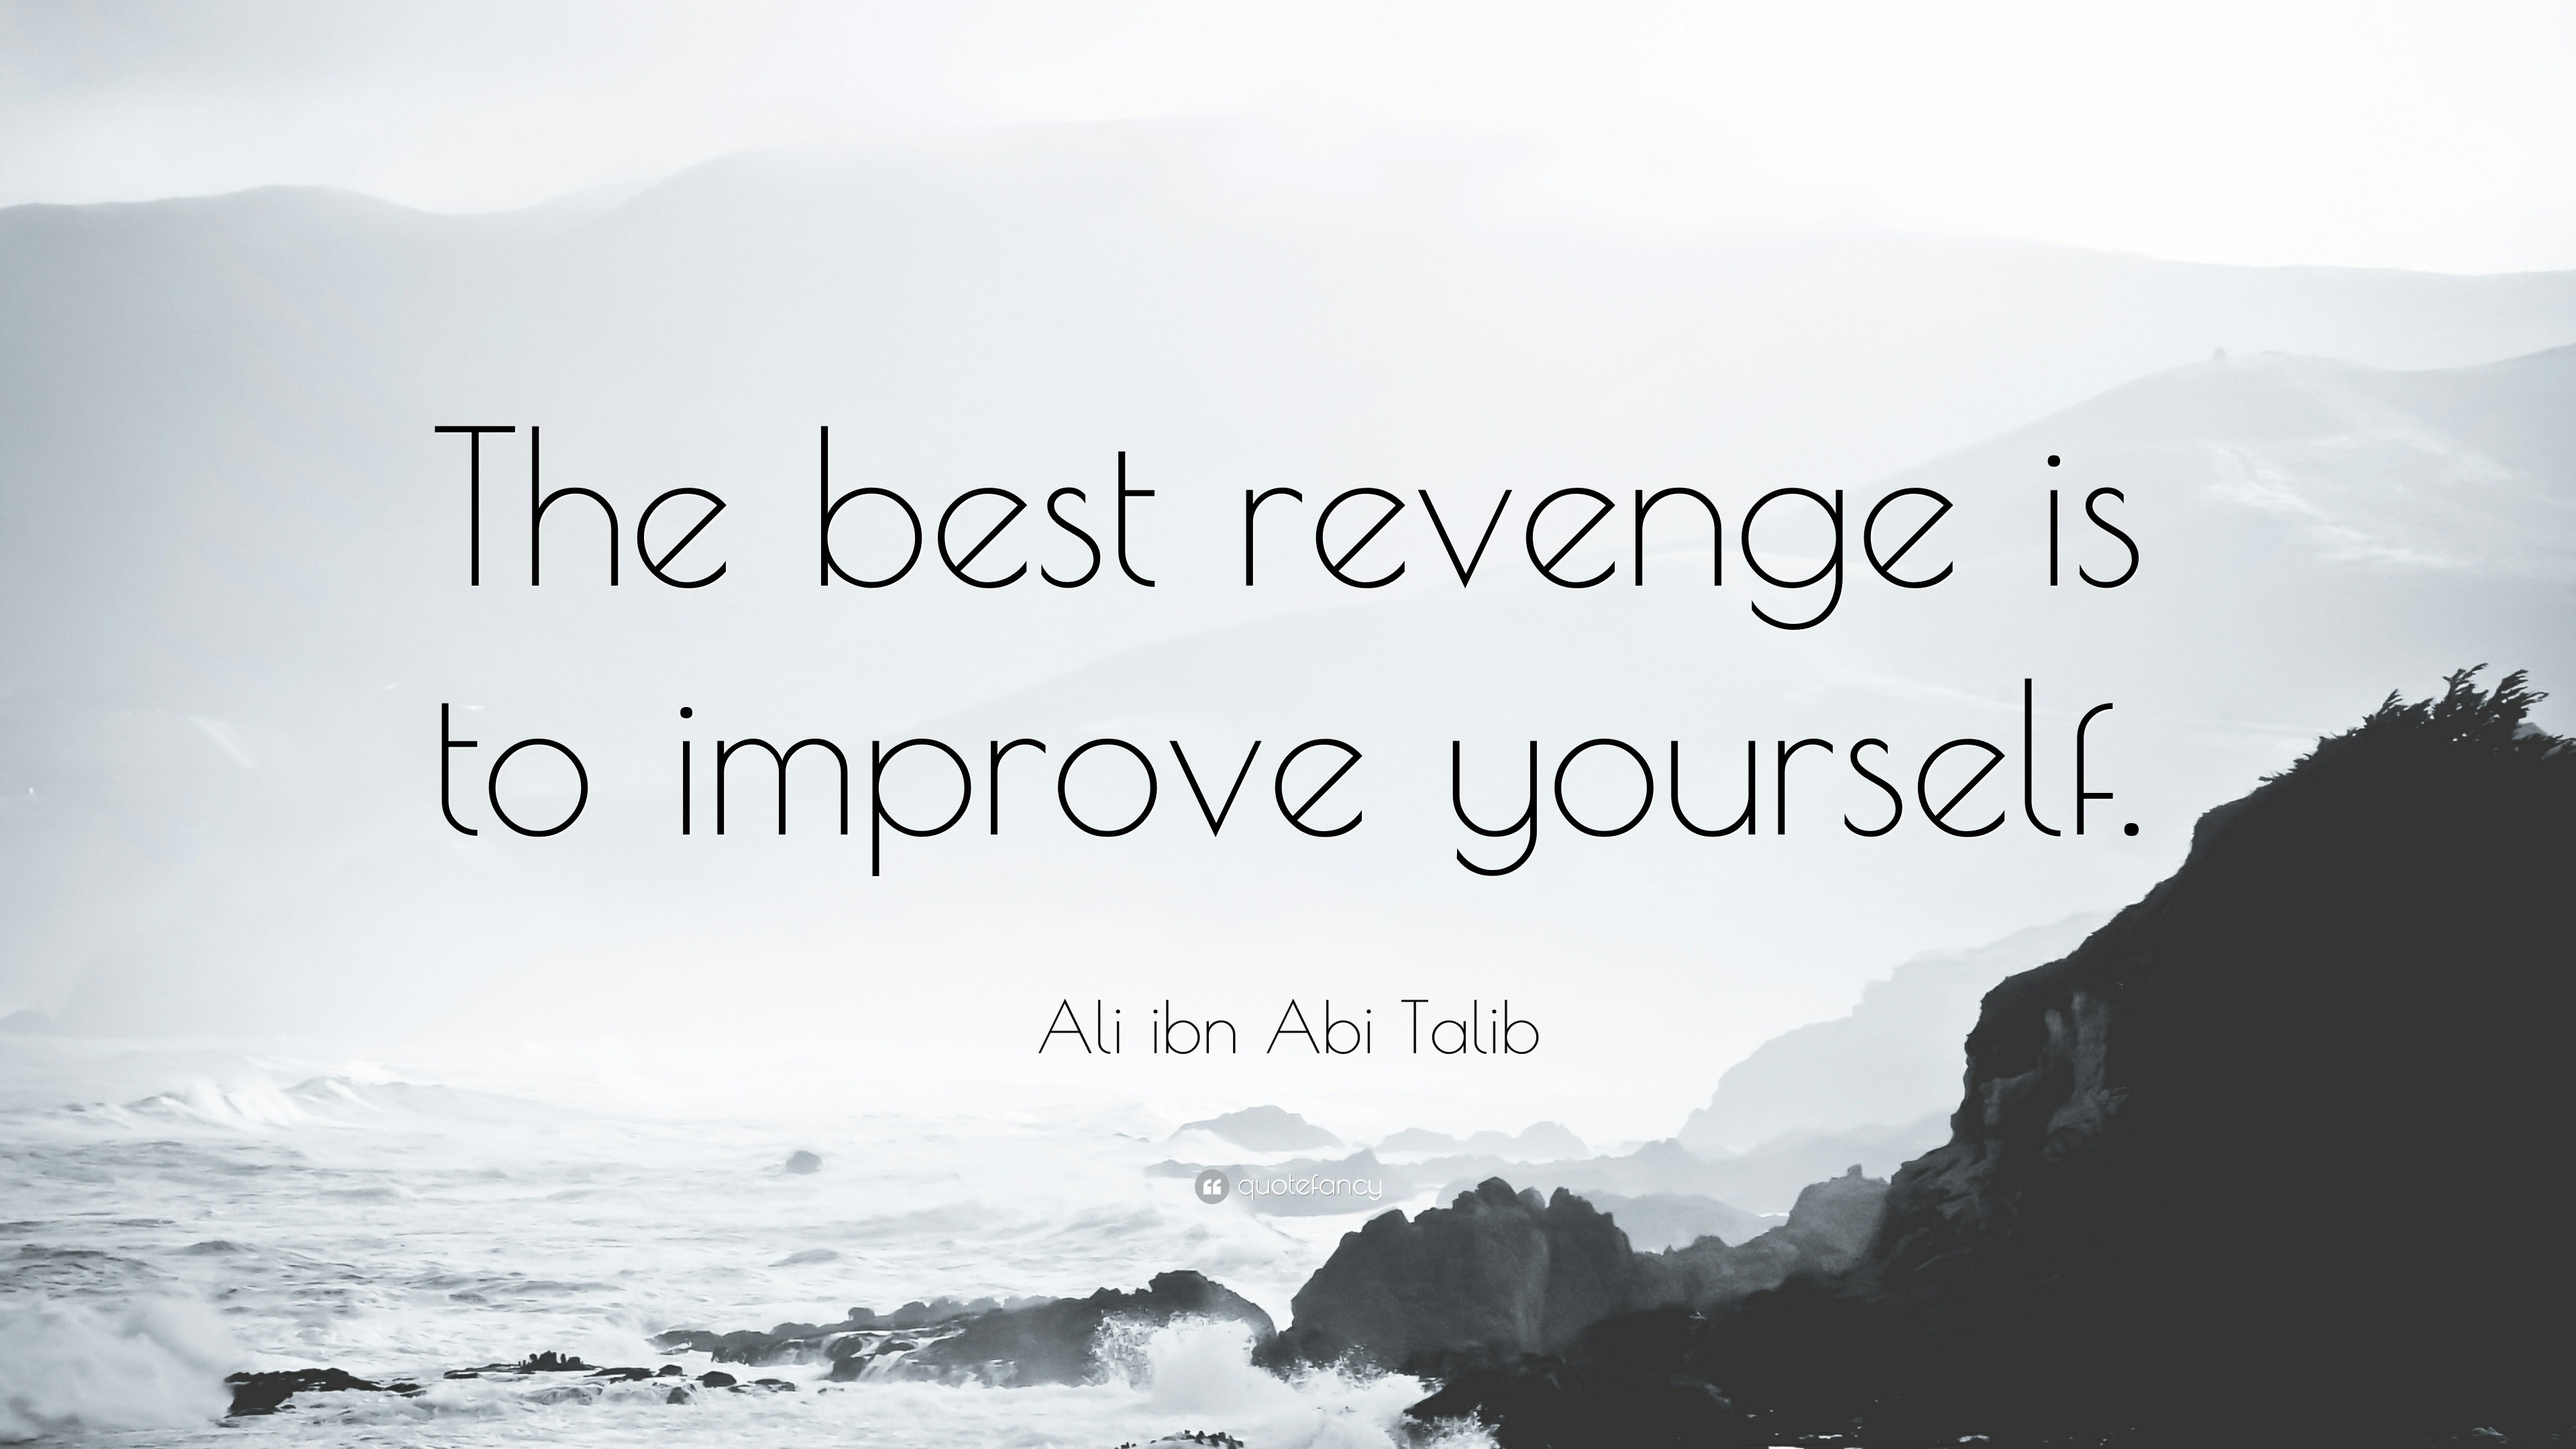 https://quotefancy.com/media/wallpaper/3840x2160/756346-Ali-ibn-Abi-Talib-Quote-The-best-revenge-is-to-improve-yourself.jpg